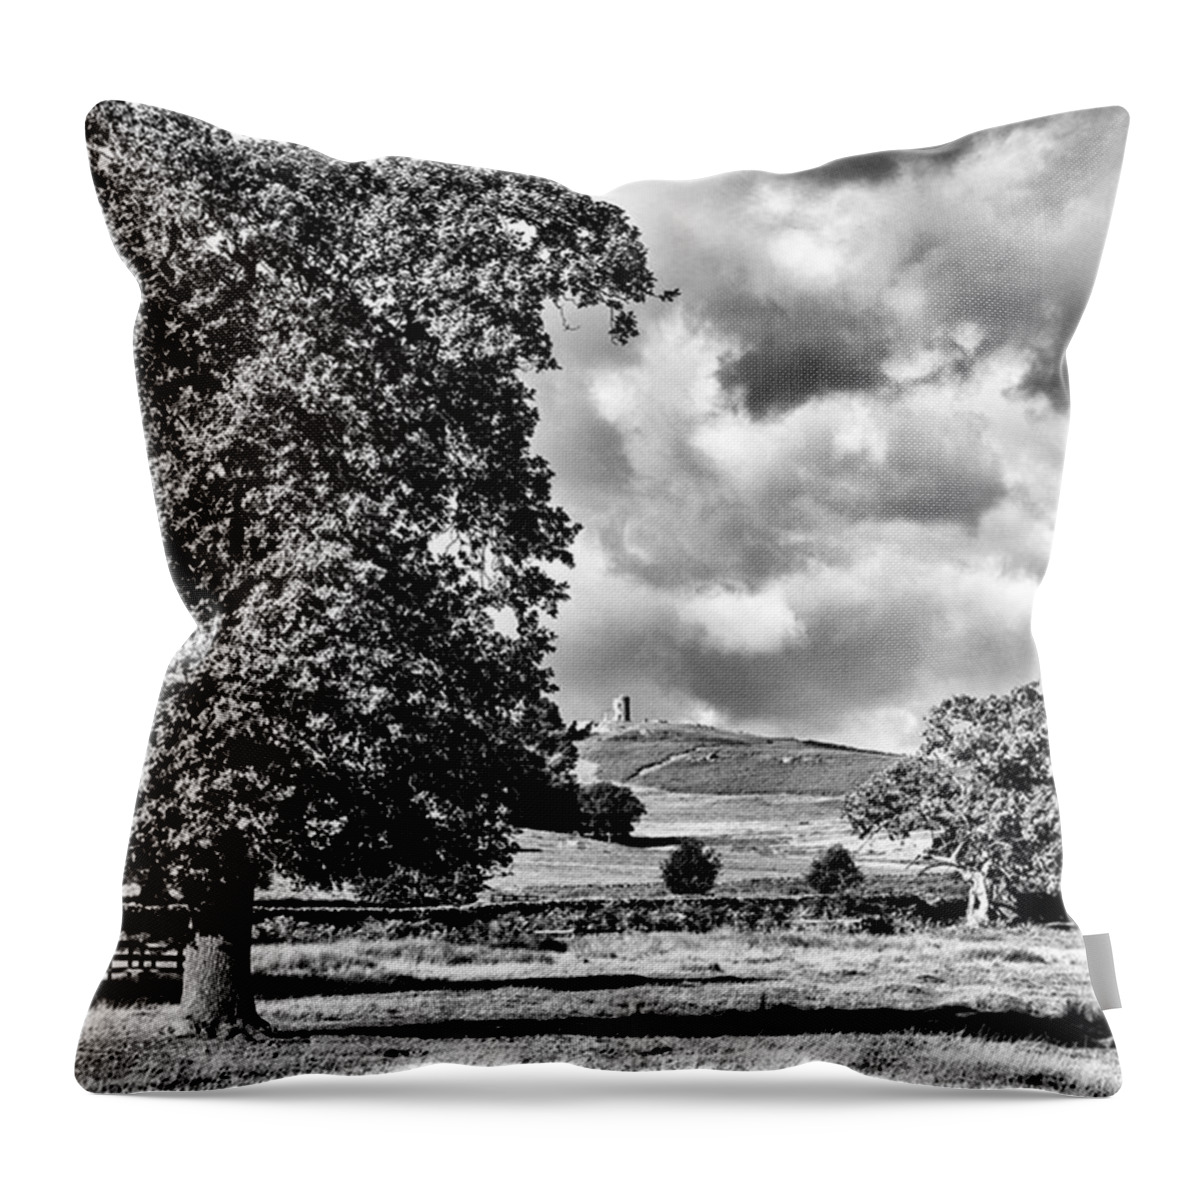 Parkland Throw Pillow featuring the photograph Old John Bradgate Park by John Edwards